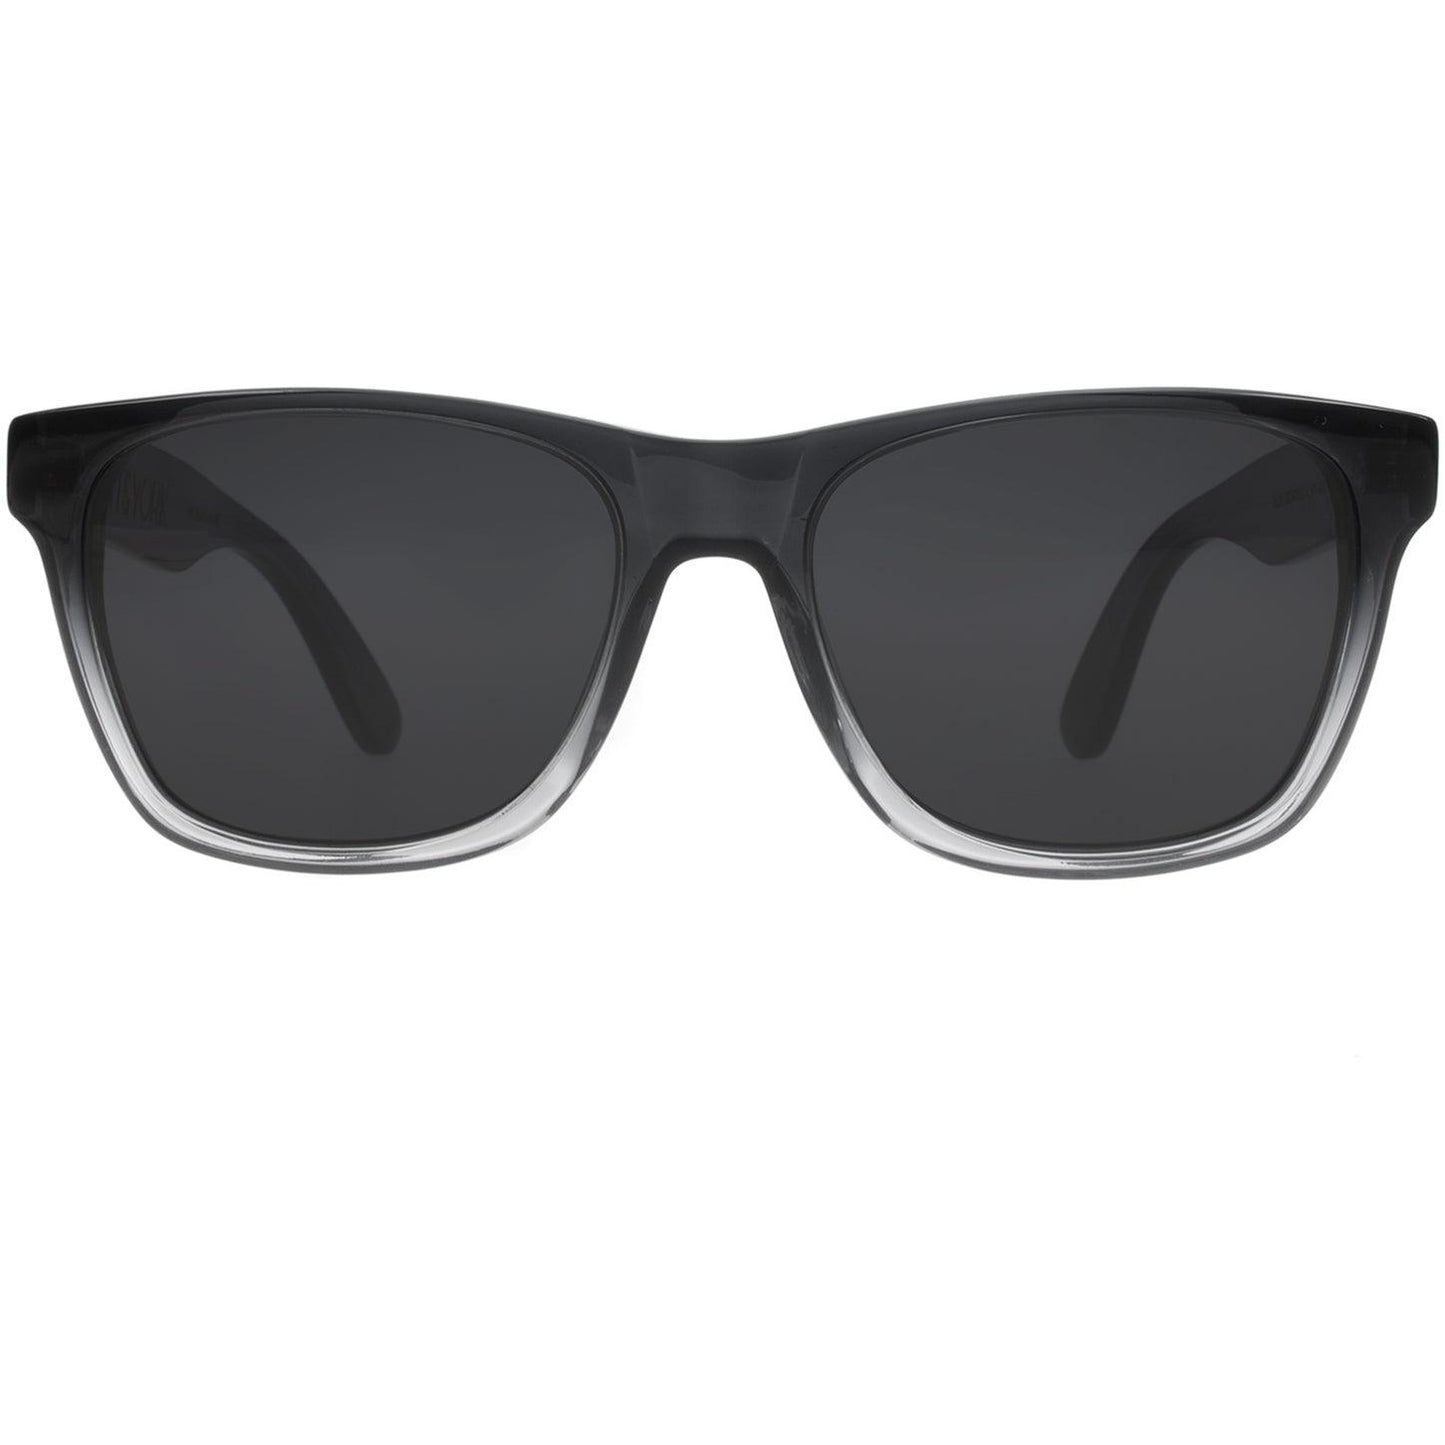 Shop Oakes Black Vintage Sunglasses for Men